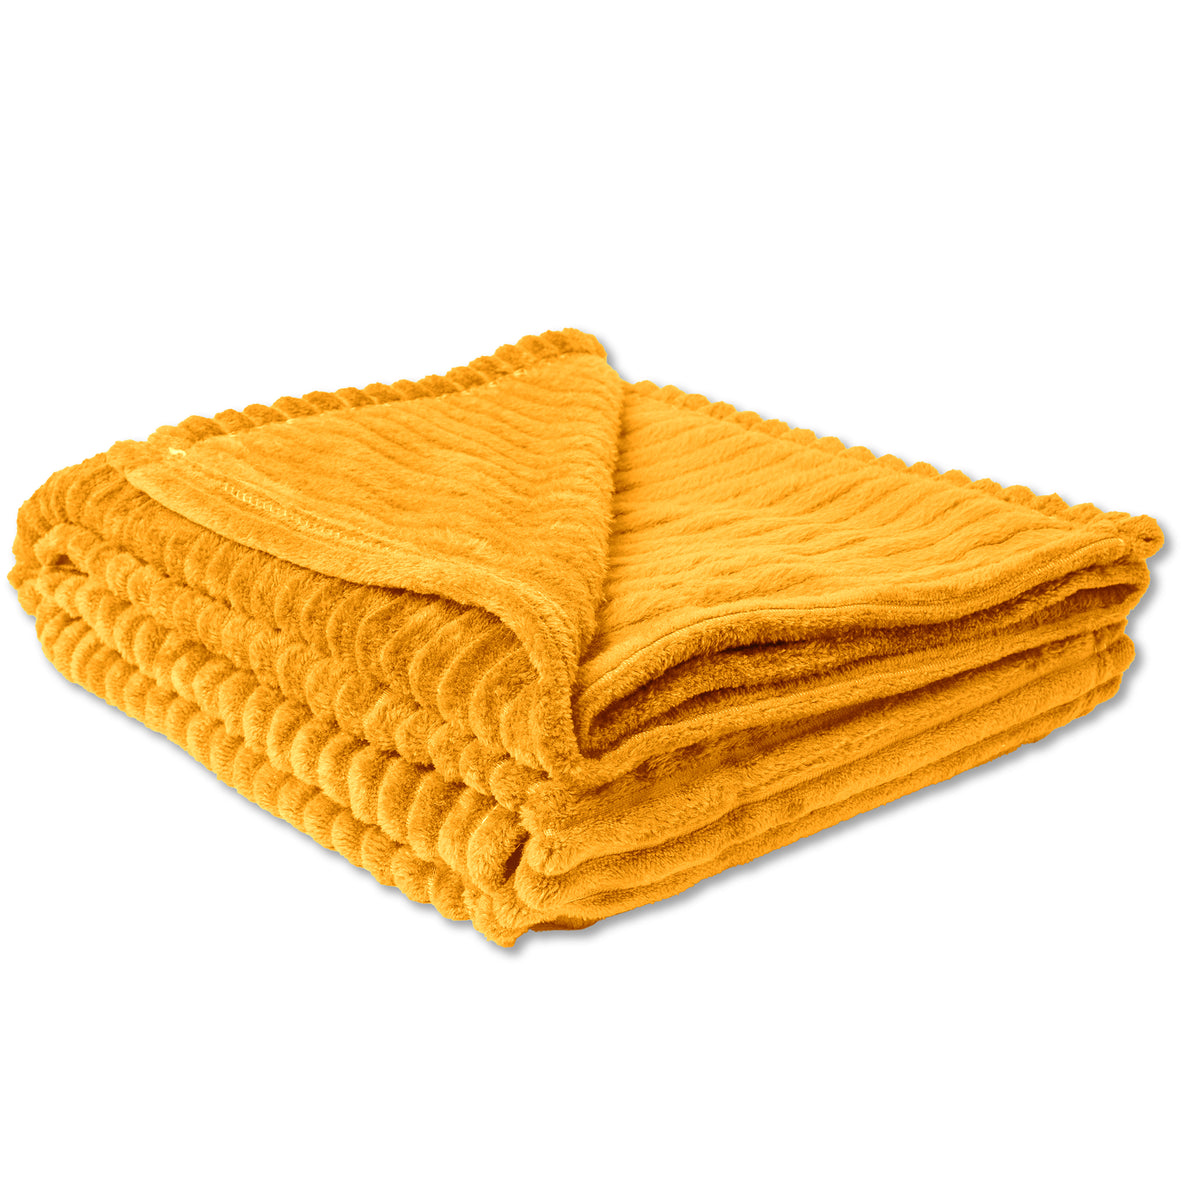 Flannel Fleece Rib Blanket Yellow/Mustard